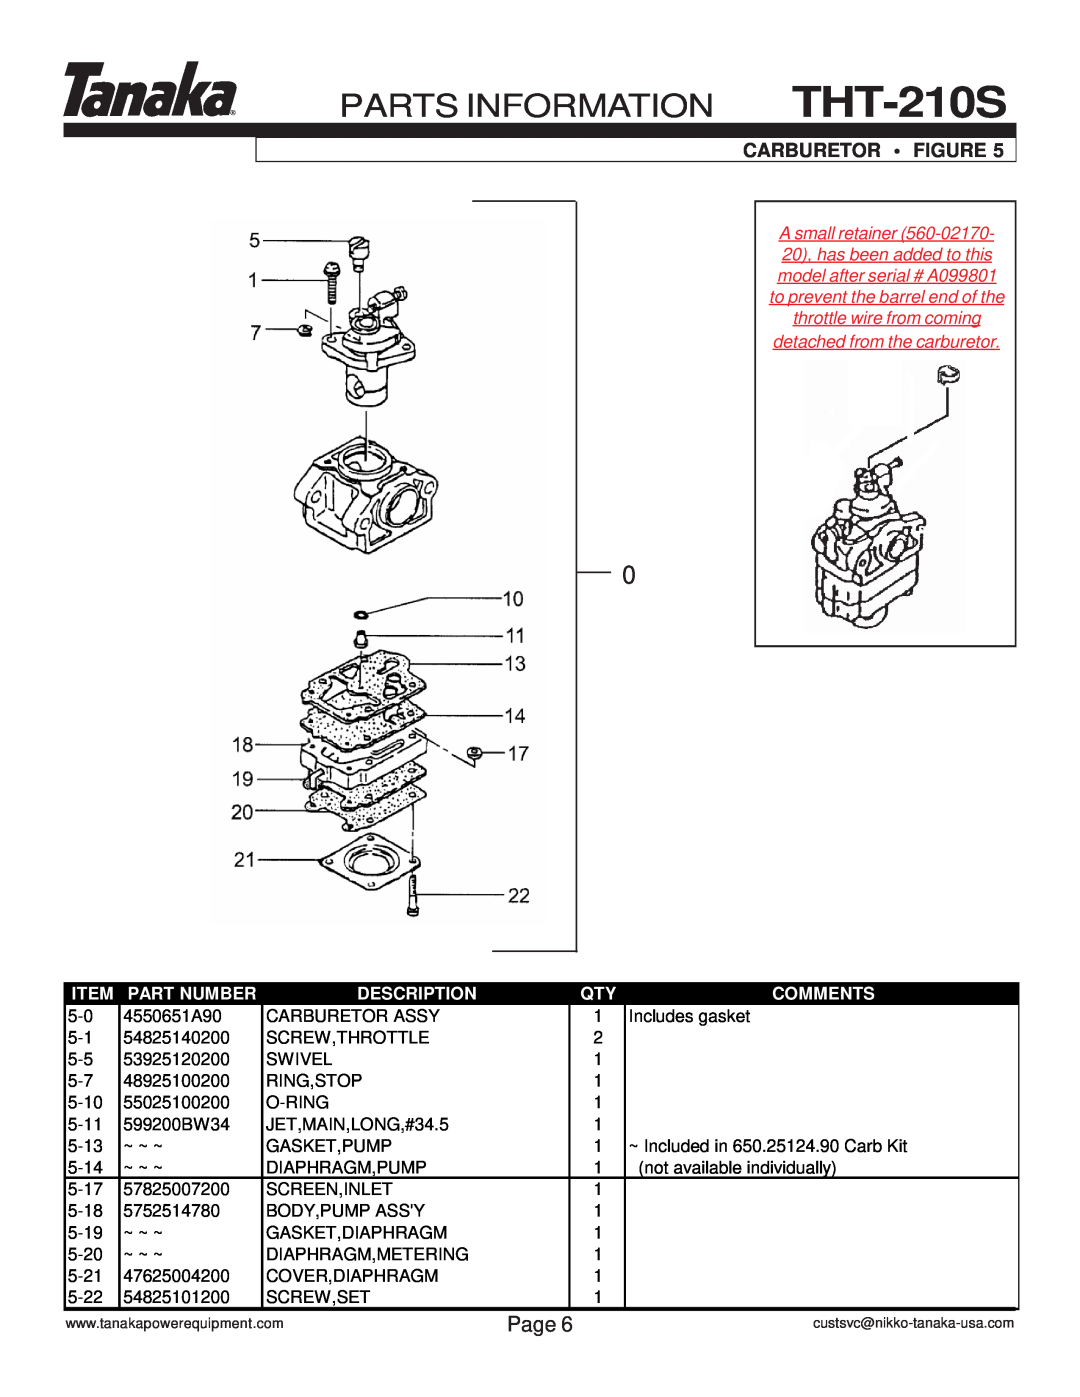 Tanaka manual Carburetor • Figure, PARTS INFORMATION THT-210S, Page, Item, Part Number, Description, Comments 